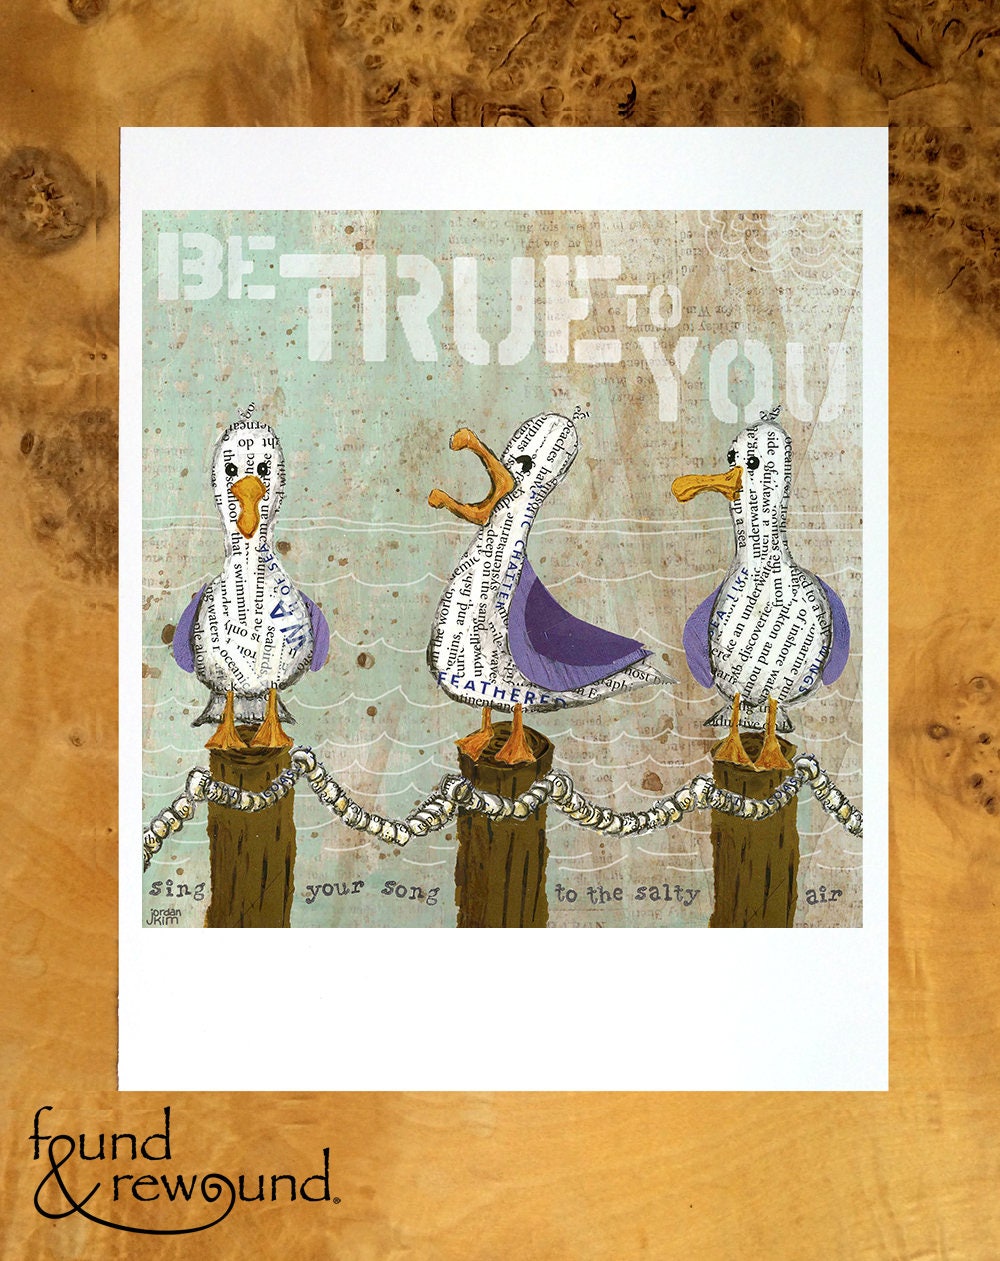 8x10 Art Print of Three Funny Seagulls - Be True to You - Inspirational - Kid Room Wall Art